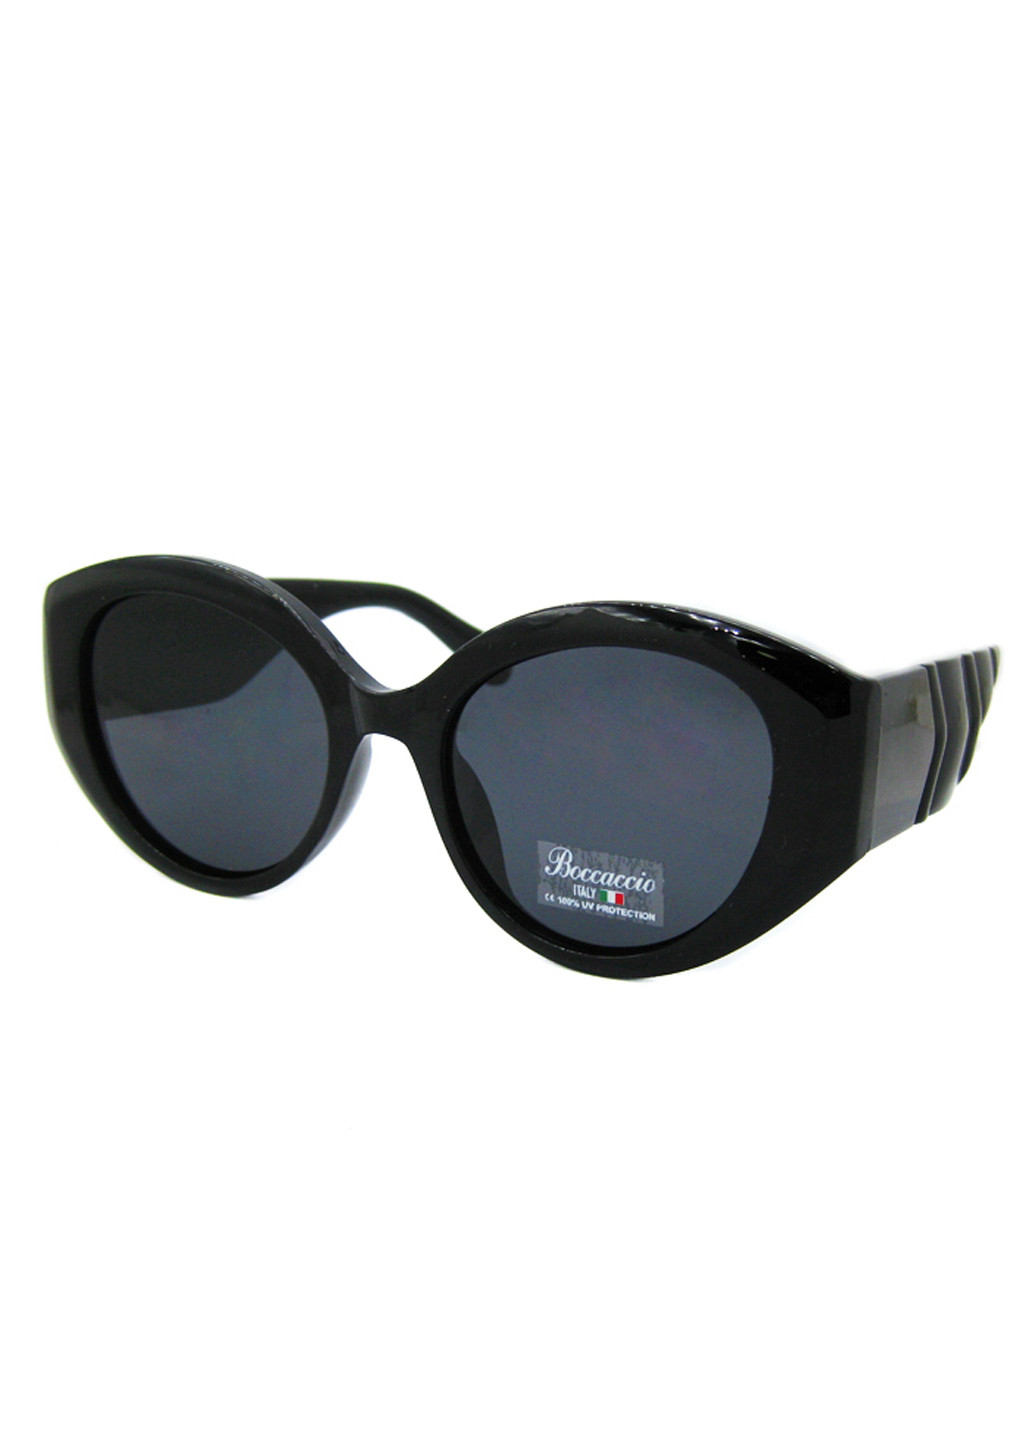 Сонцезахиснi окуляри Boccaccio bcp1845 (260817718)